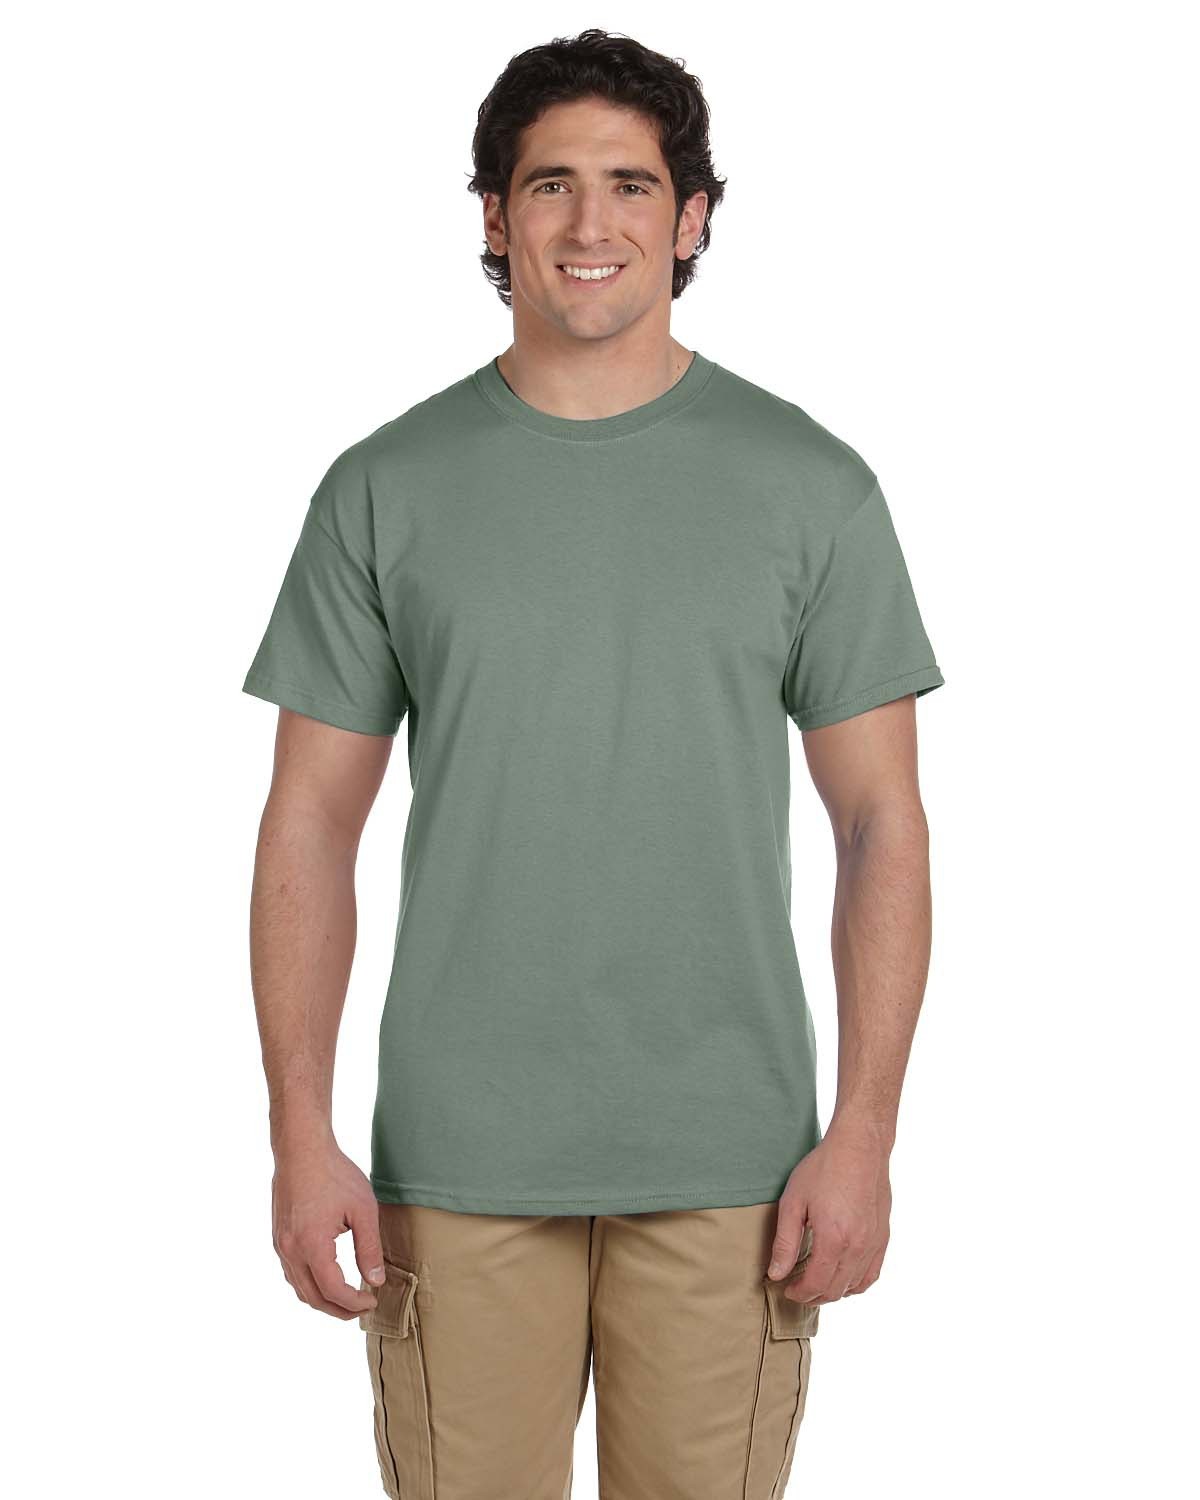 Custom Cotton T shirt